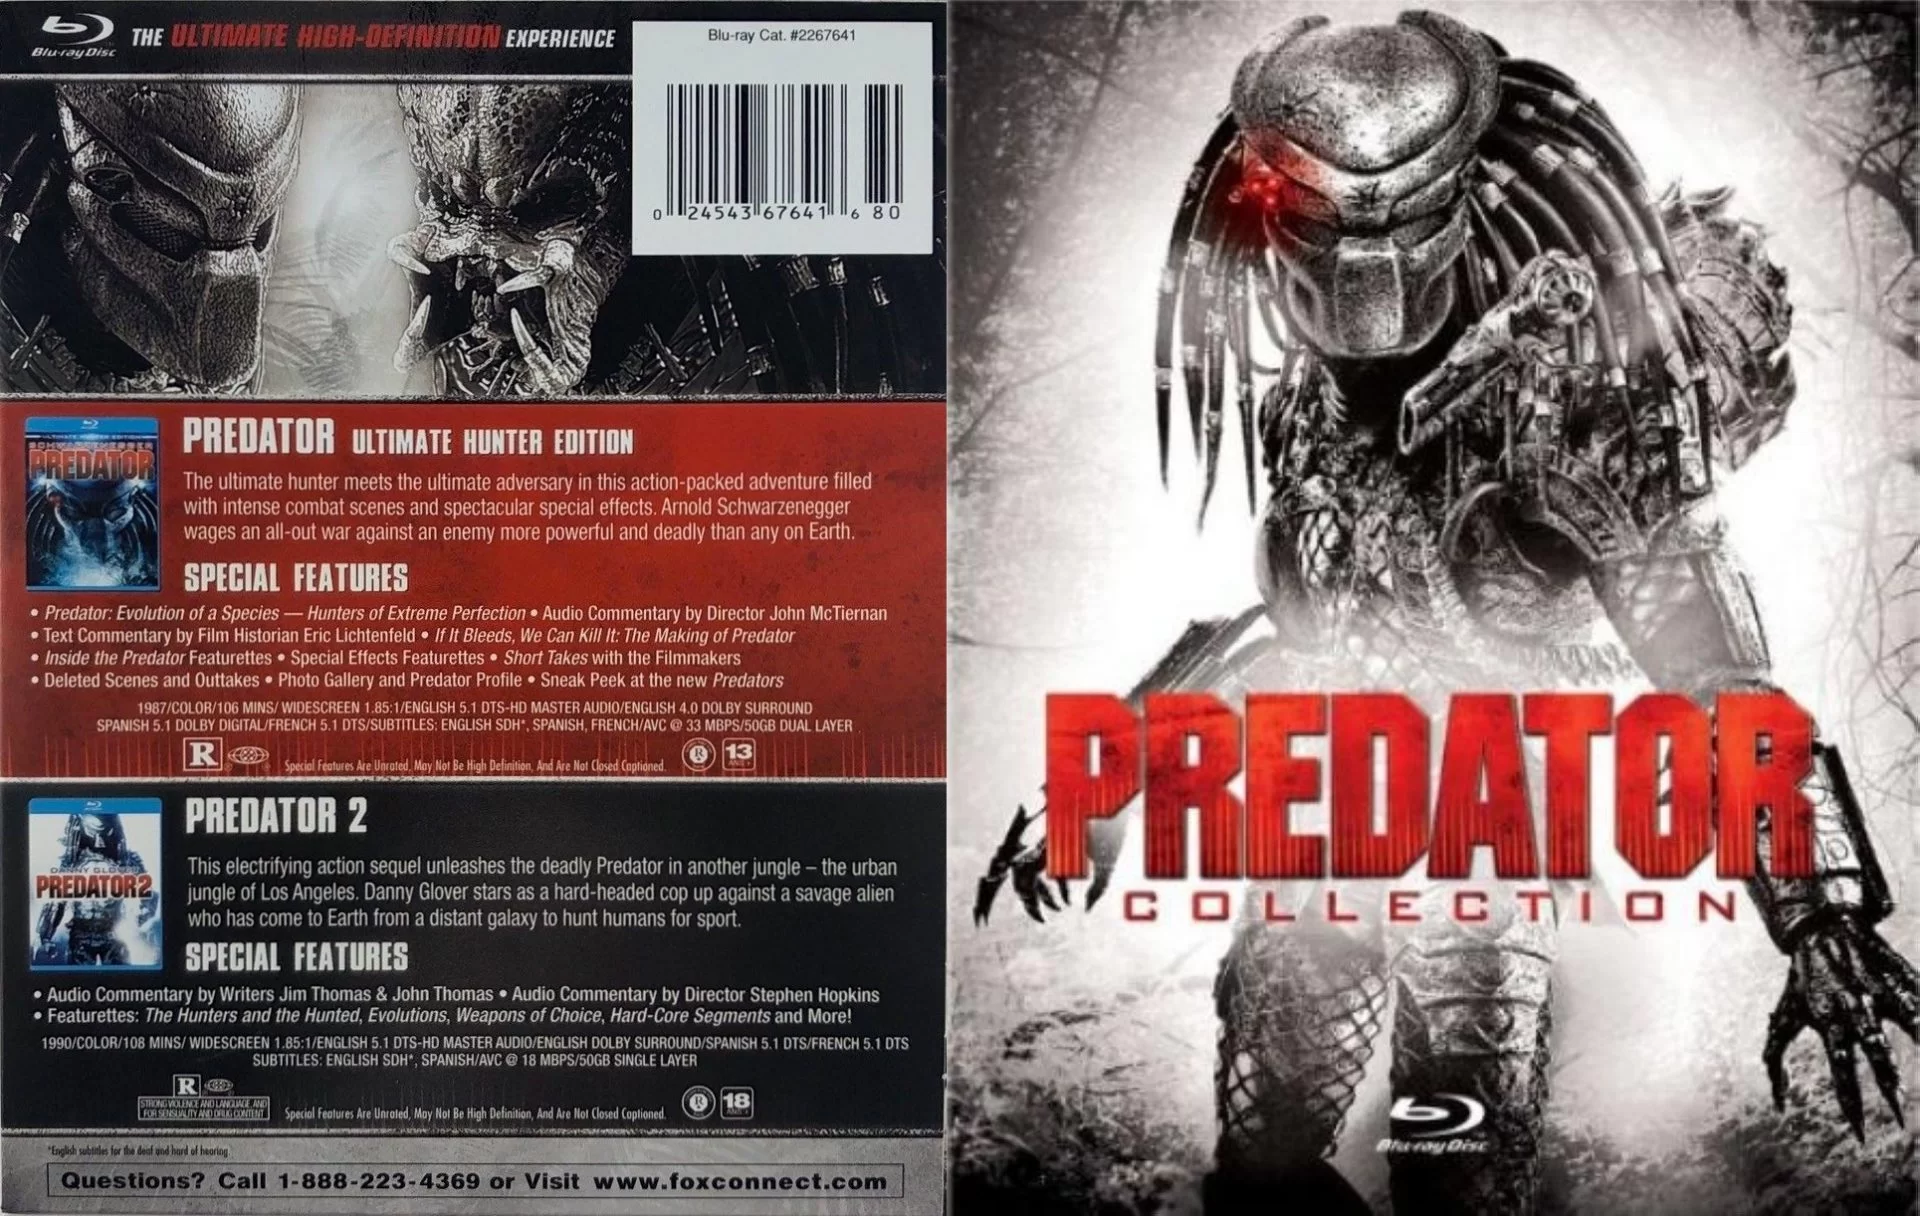 Predator DVD Sets AvPGalaxy